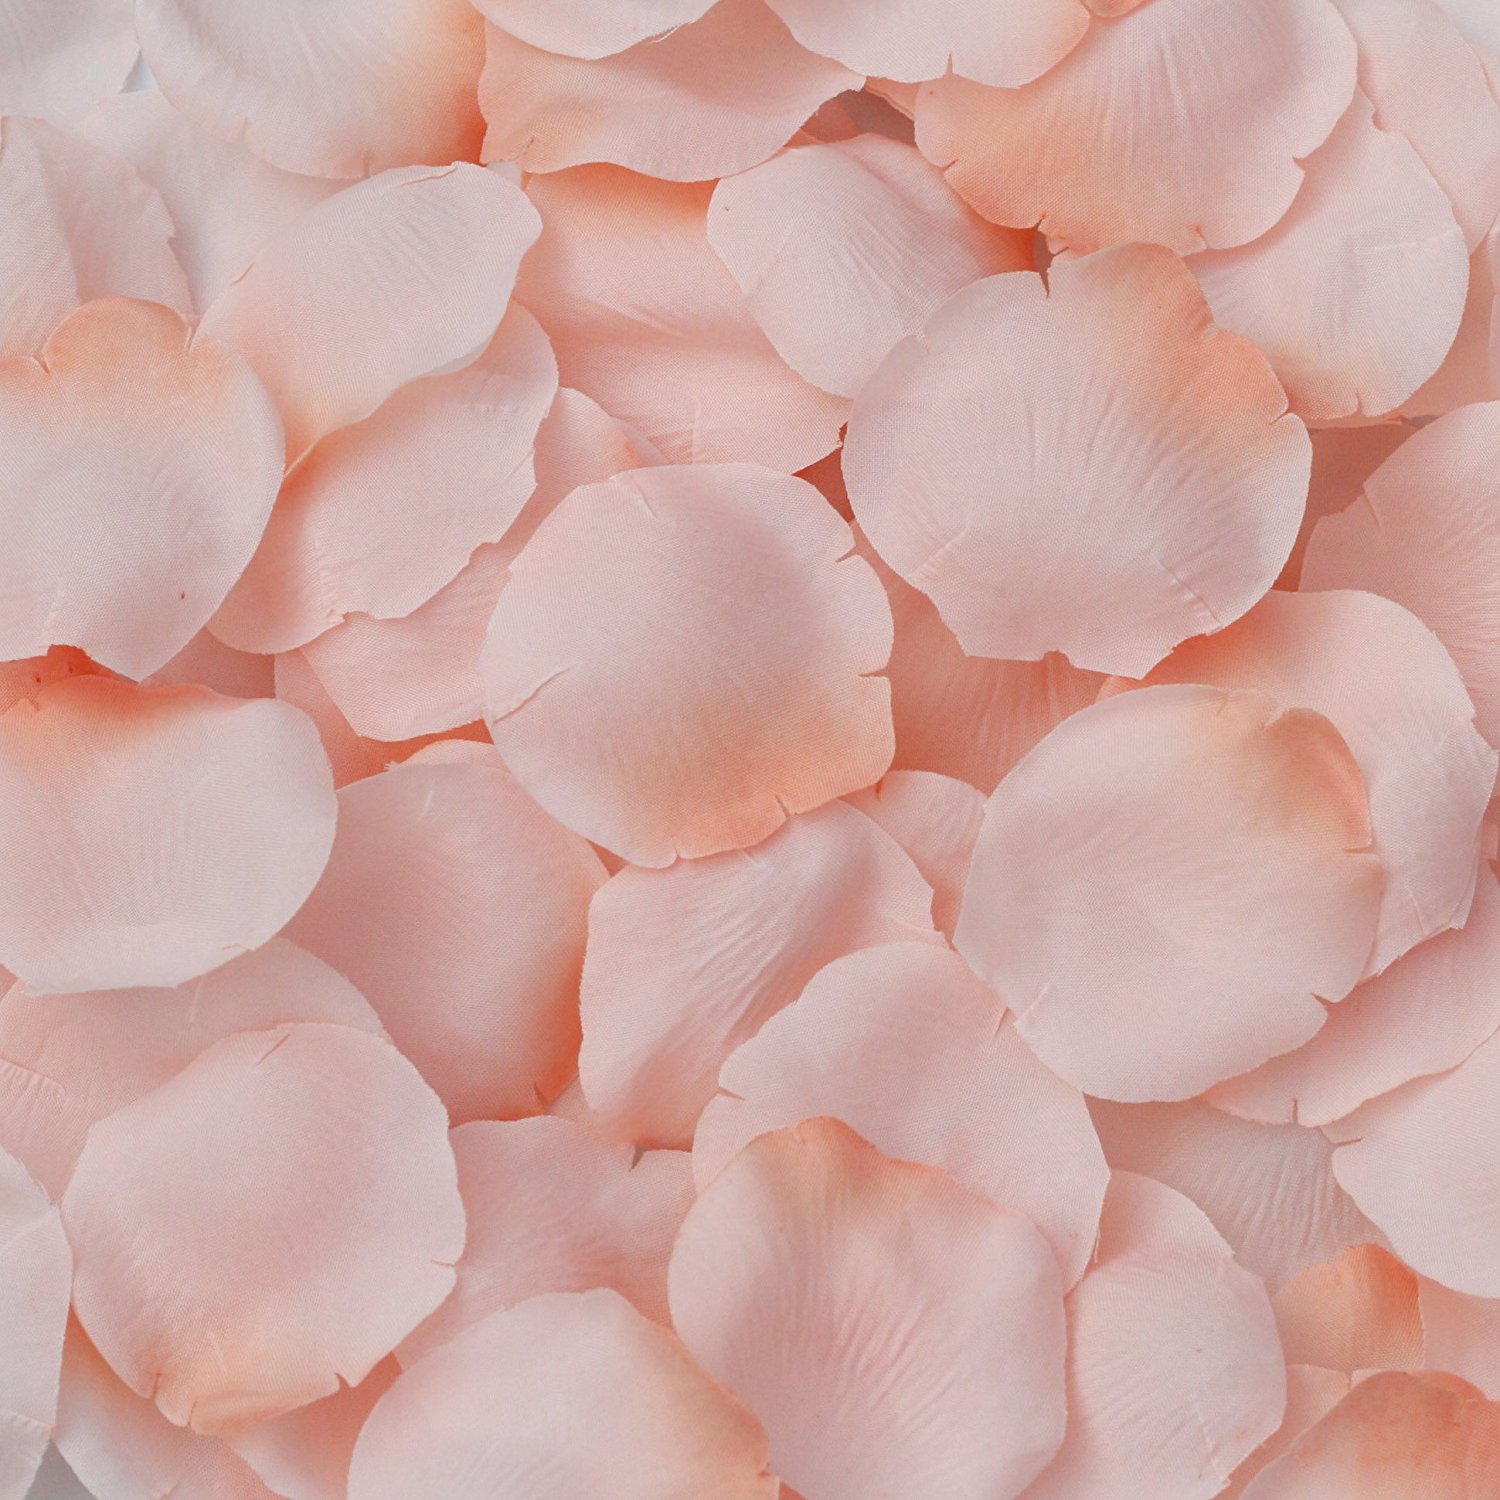 Amazon.com: Peach Silk Rose Petals - 250 Petals - Wedding ...